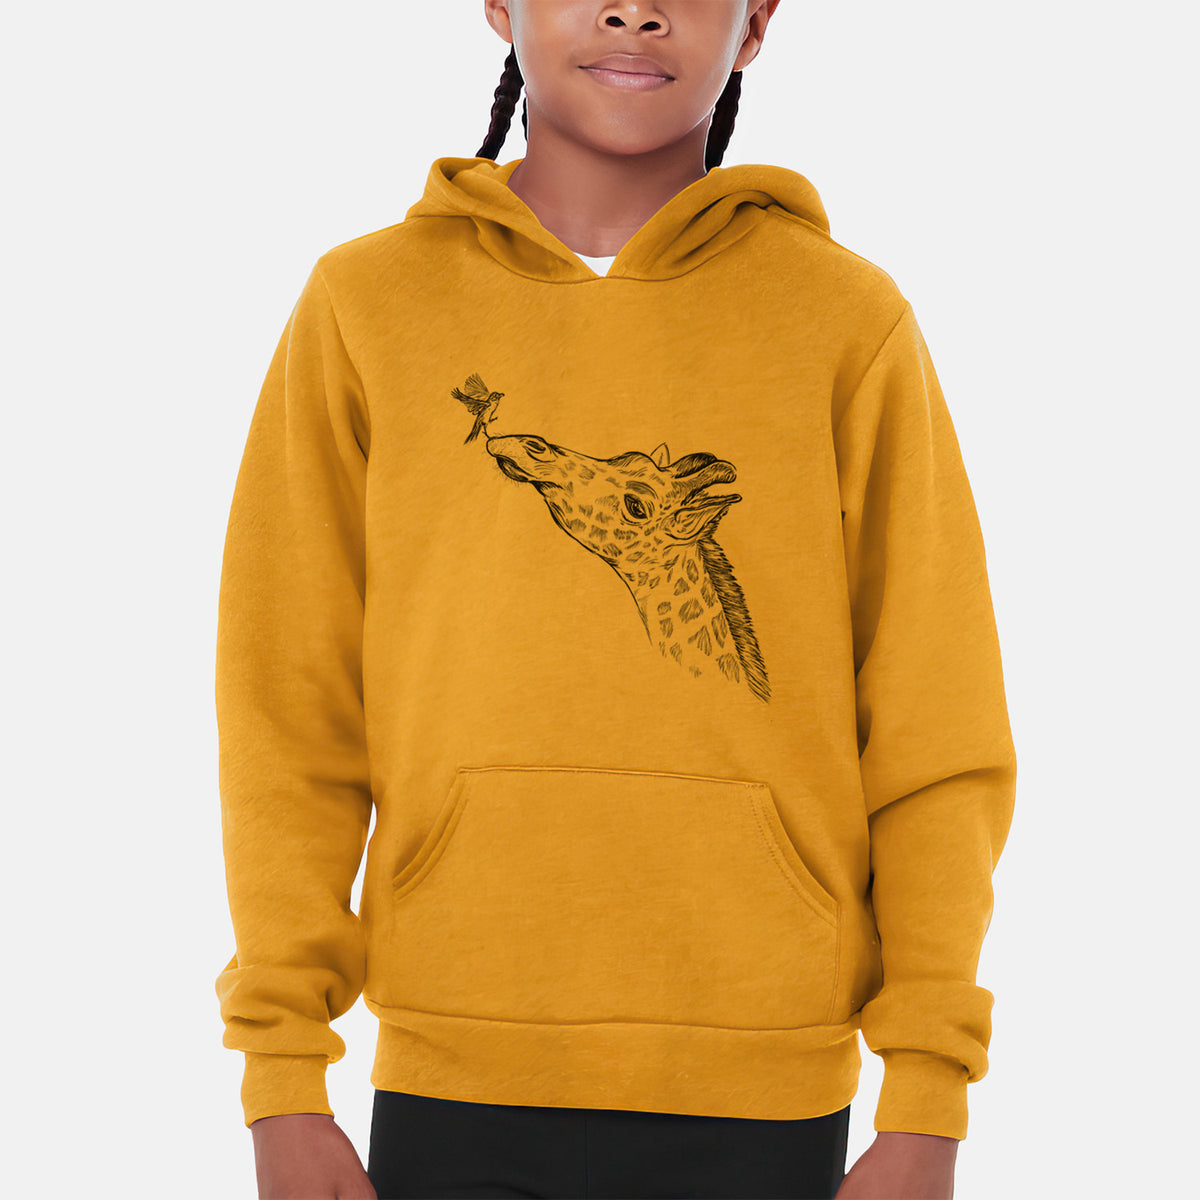 Northern Giraffe - Giraffa camelopardalis - Youth Hoodie Sweatshirt